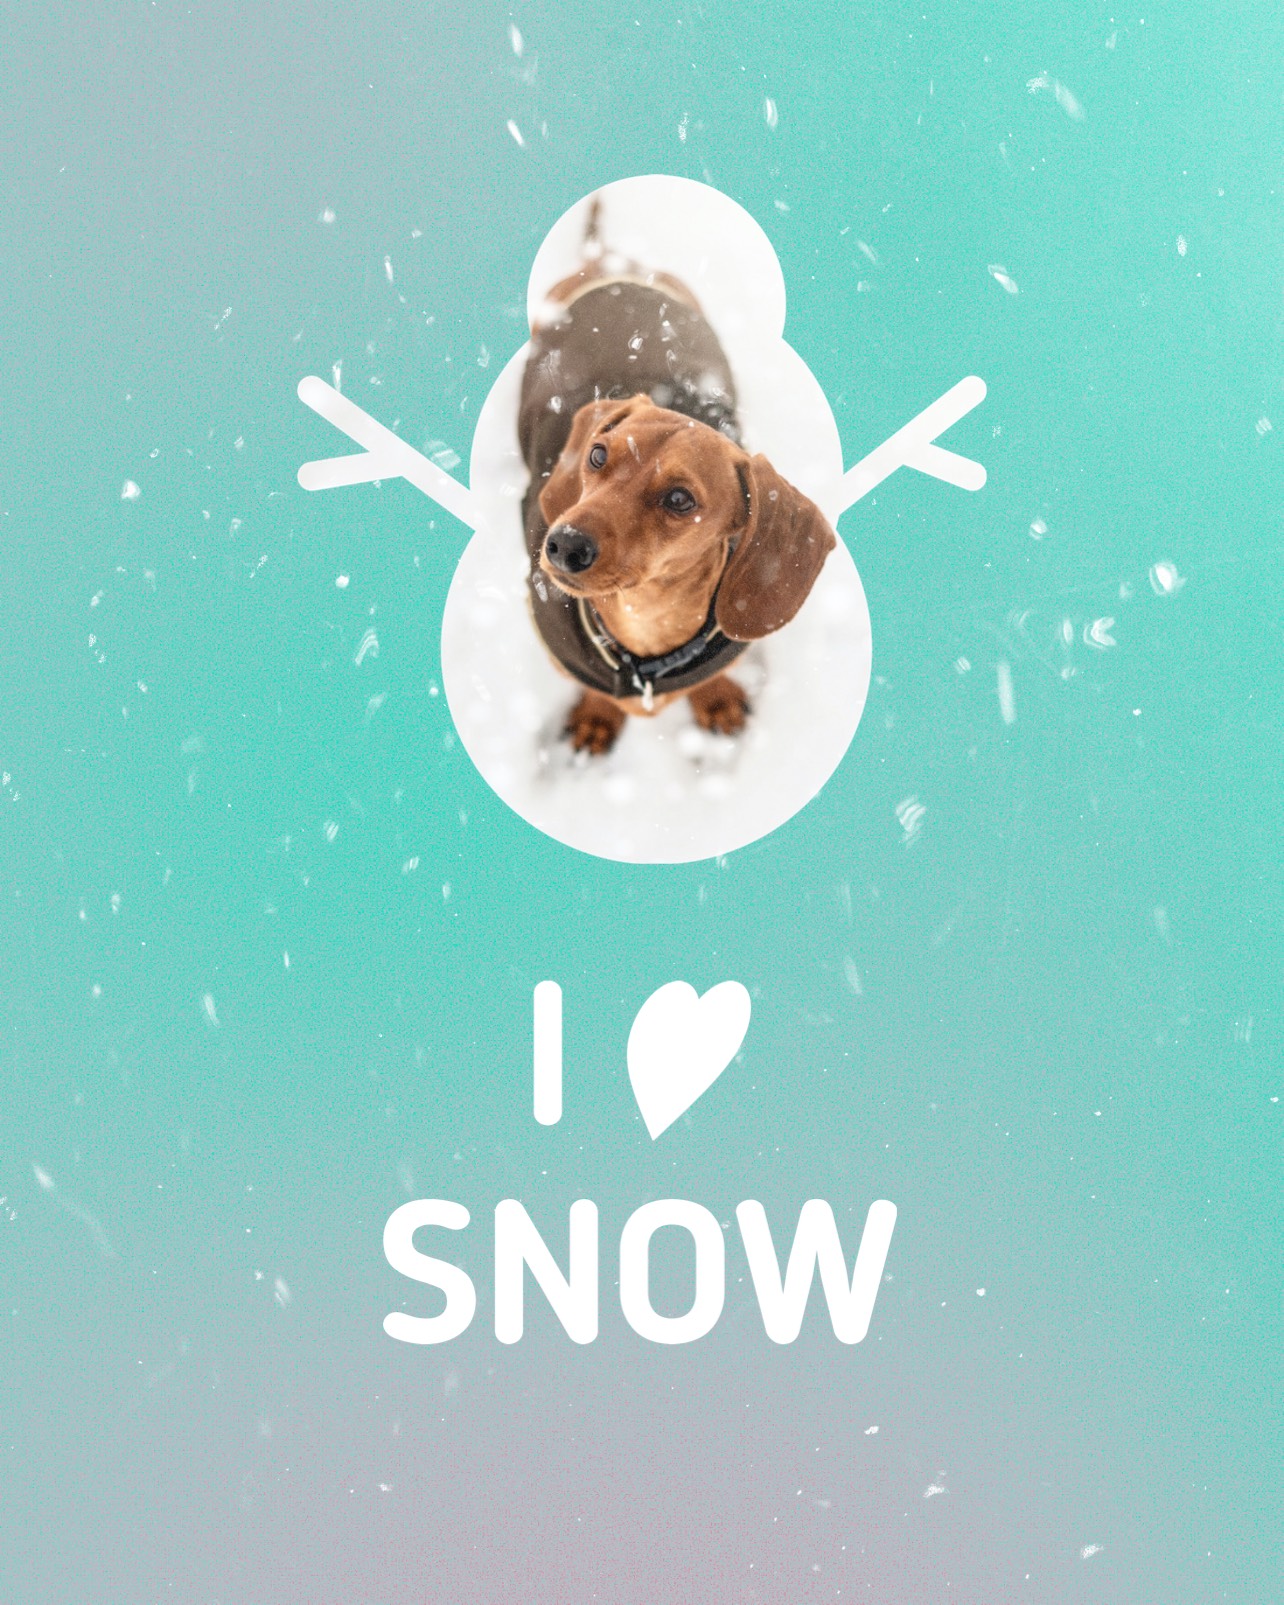 I love snow and dog Winter Wonderland template